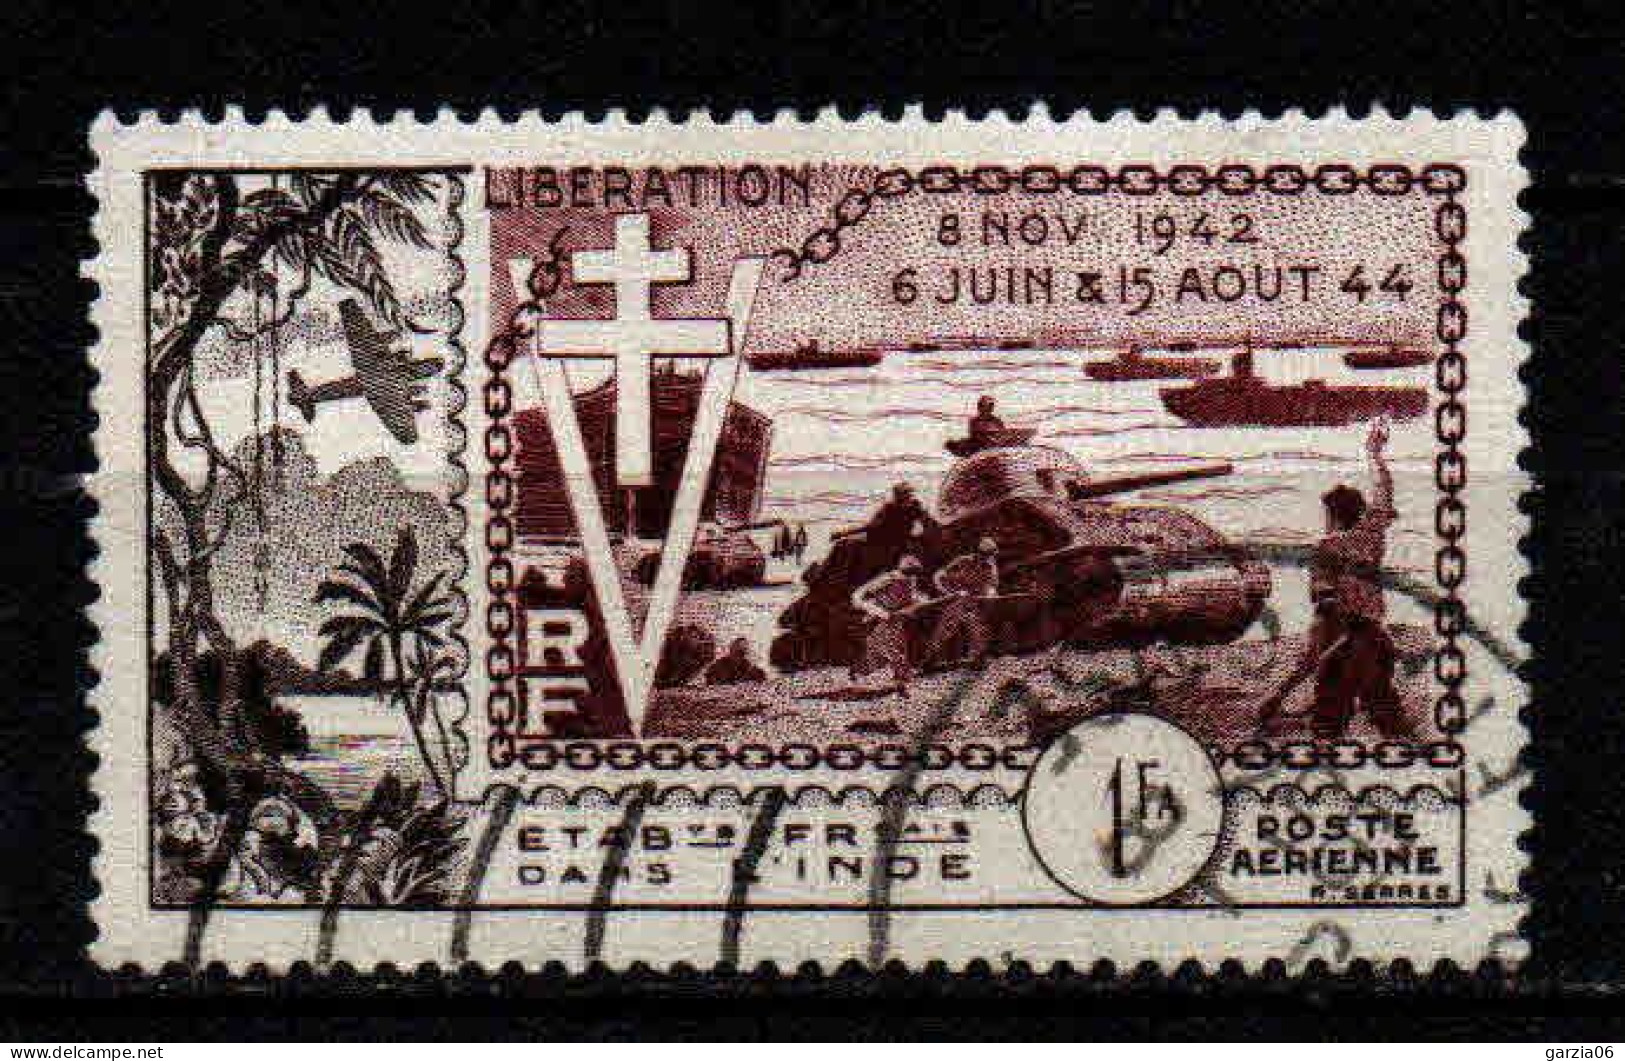 Inde - 1954 - Libération  - PA 22  - Oblit - Used - Used Stamps